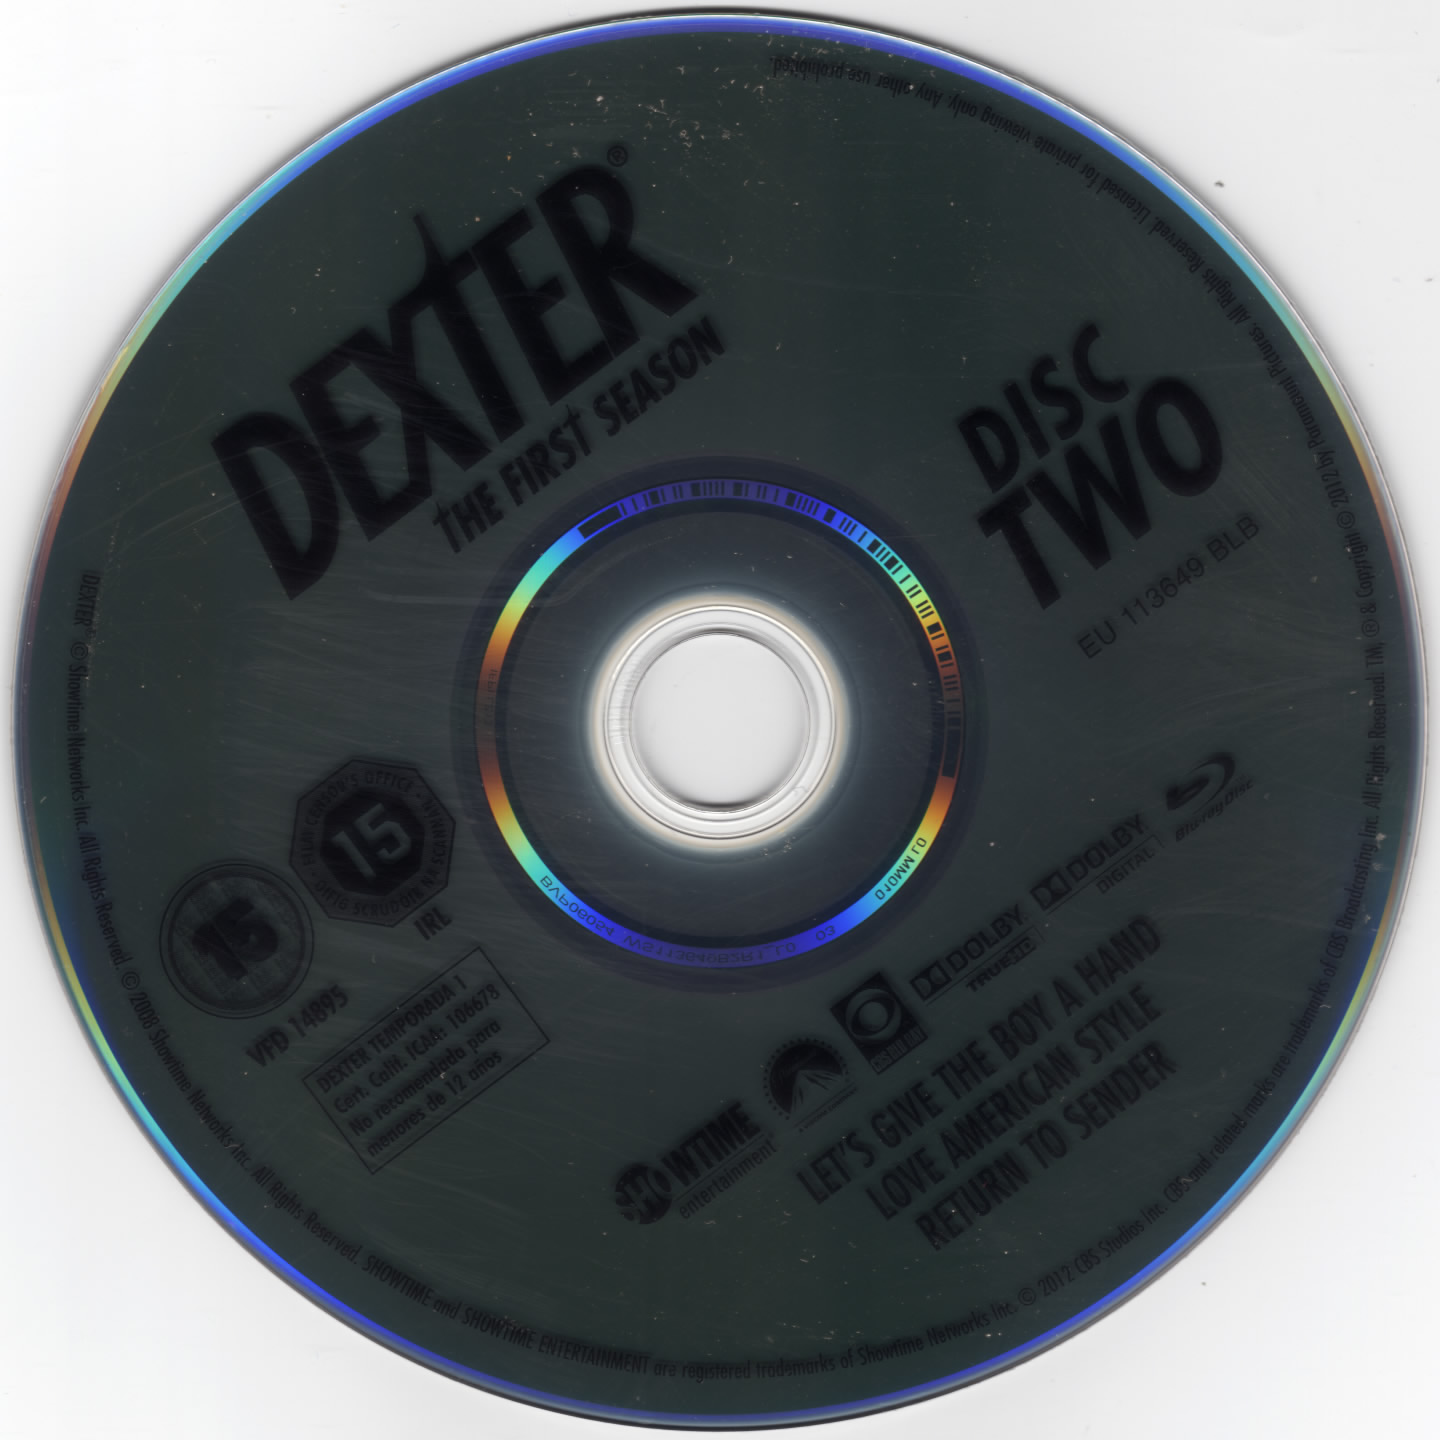 Dexter saison 1 DISC 2 (BLU-RAY)